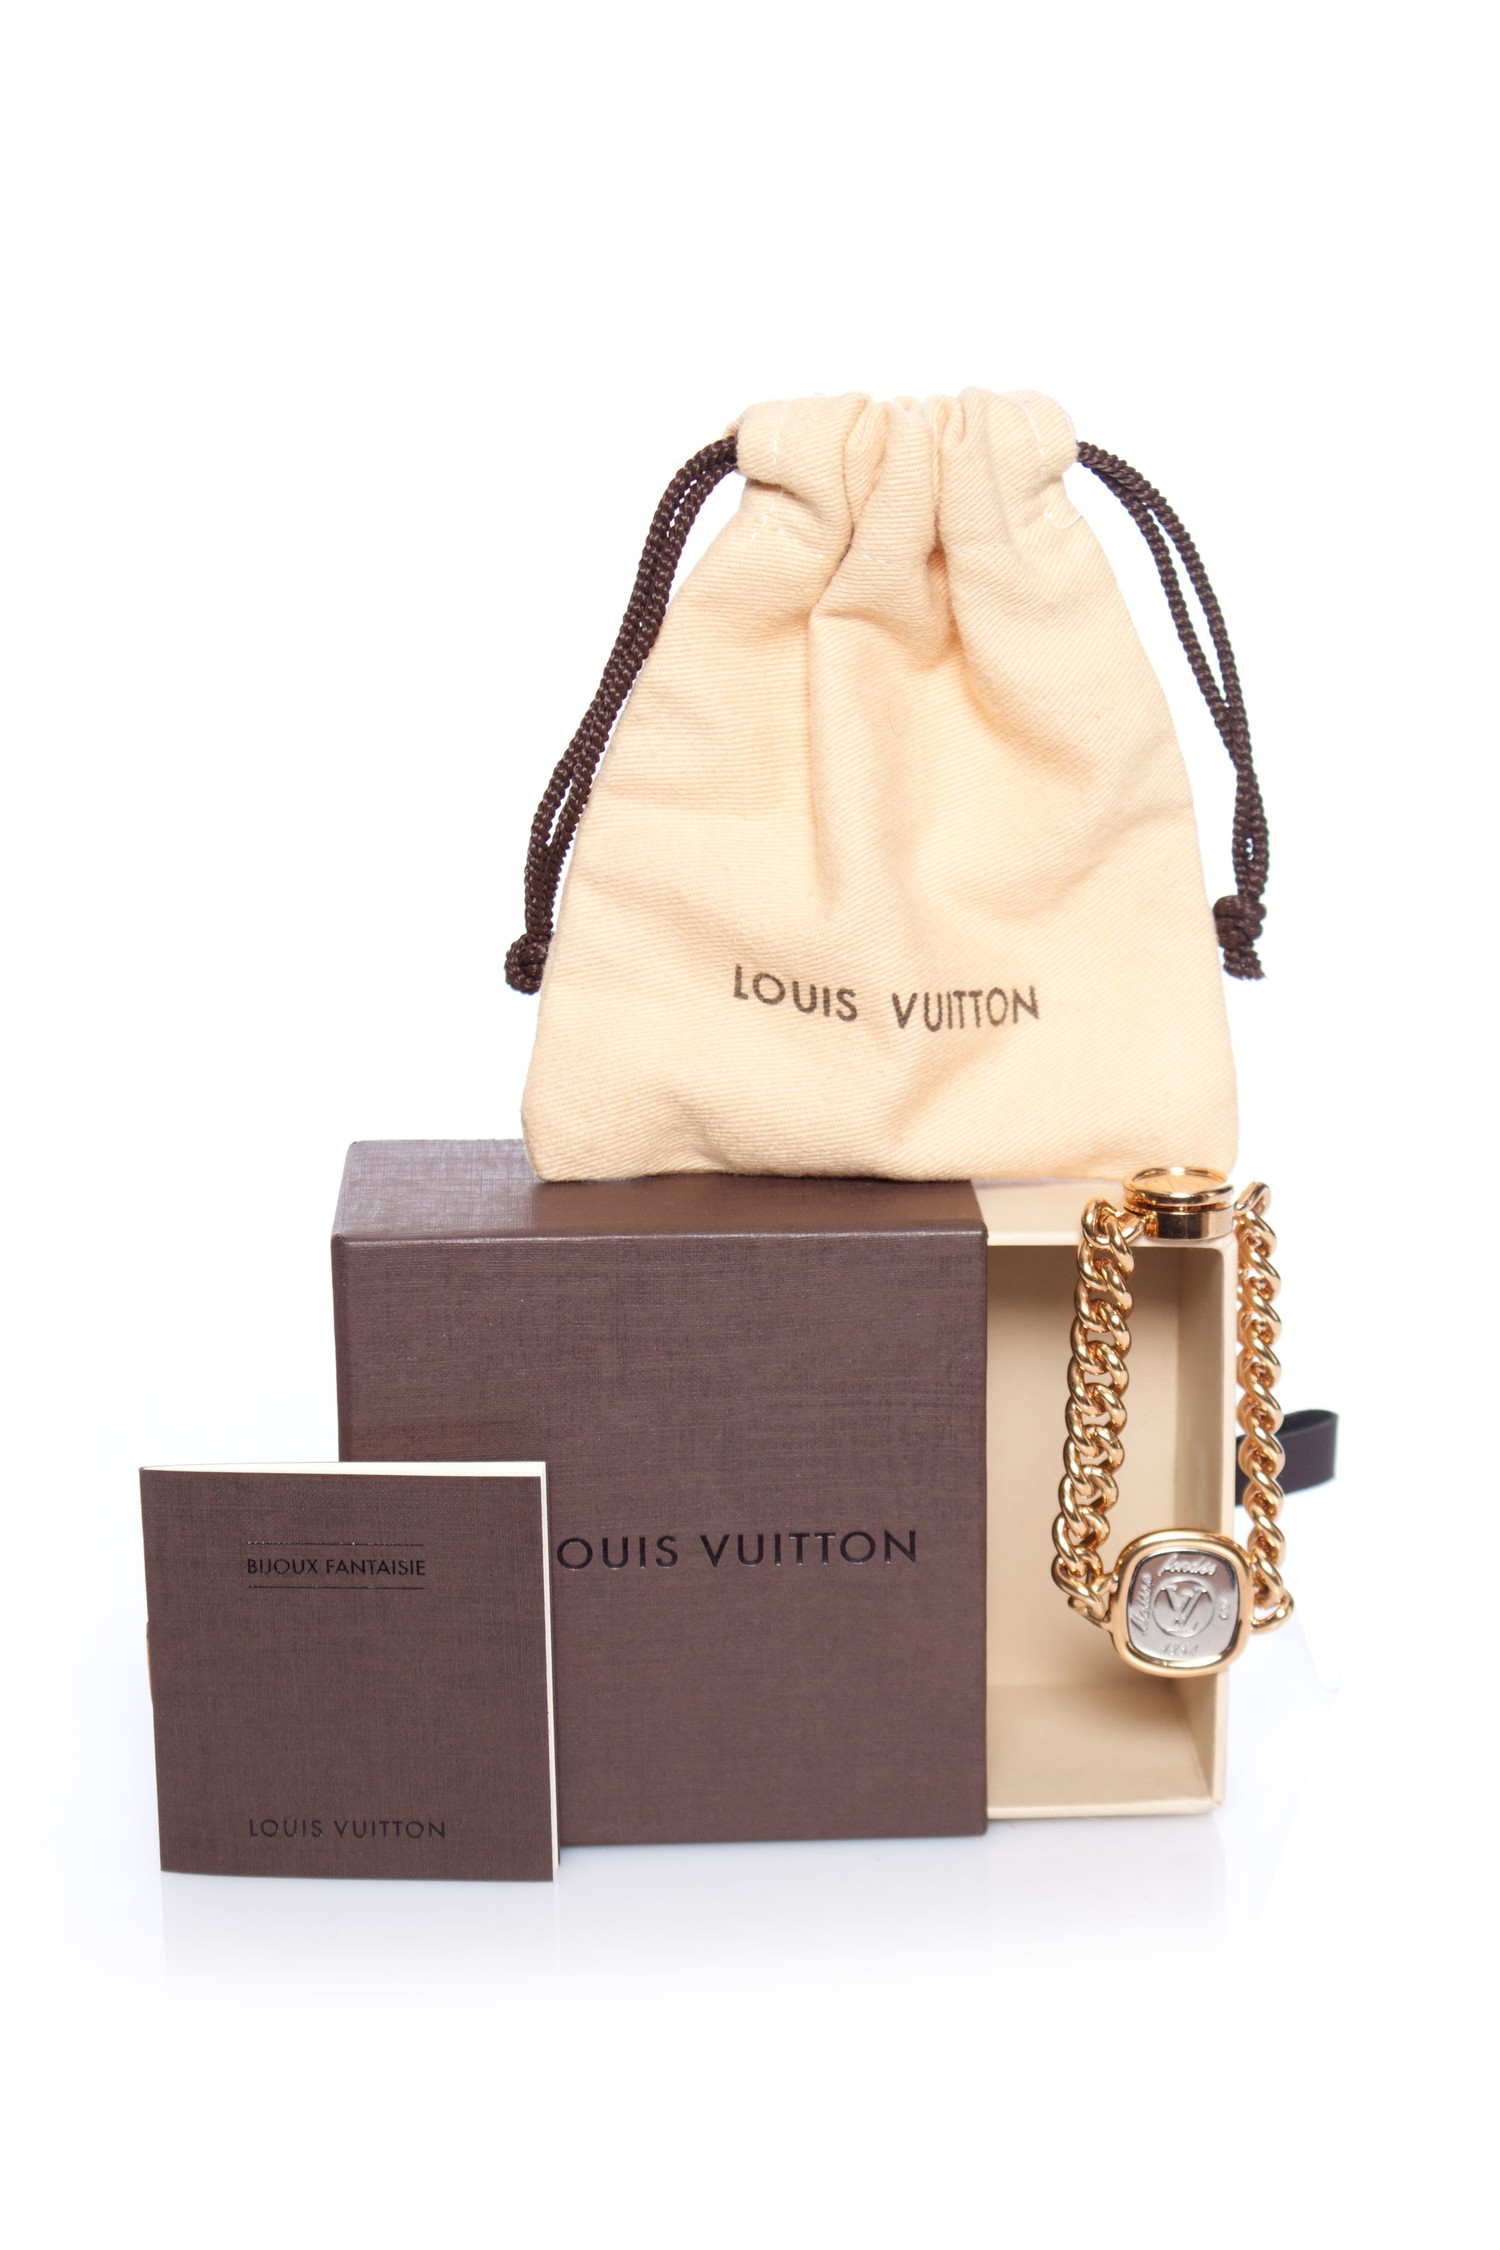 LOUIS VUITTON Louis Vuitton K18WG Brass Le Cool Diamond Bracelet K18WG/ Diamond